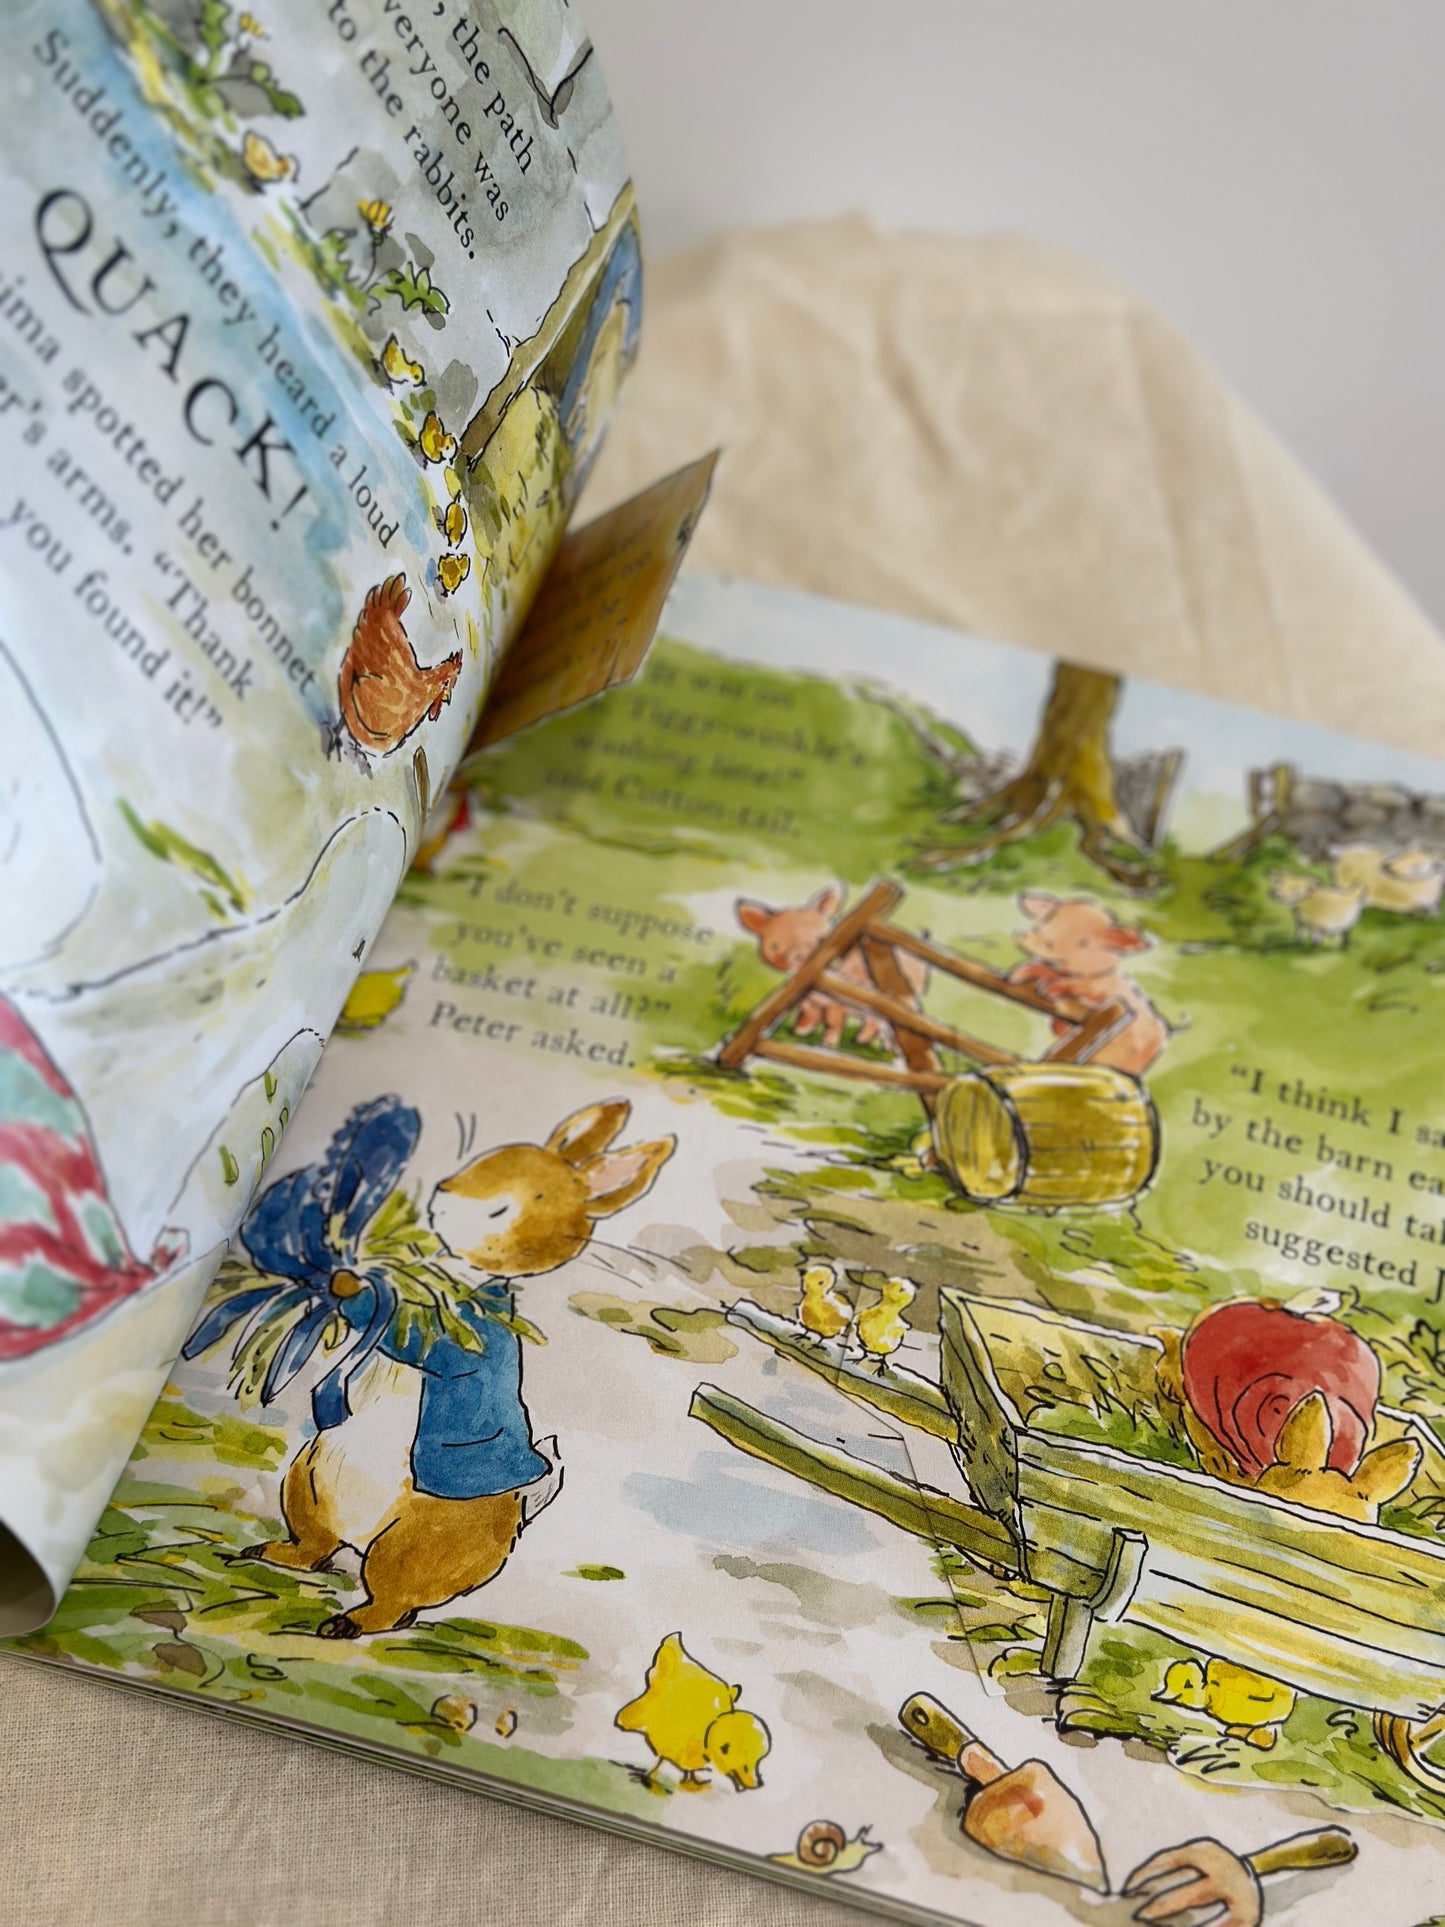 Peter Rabbit: The Great Outdoors Treasure Hunt [Book]